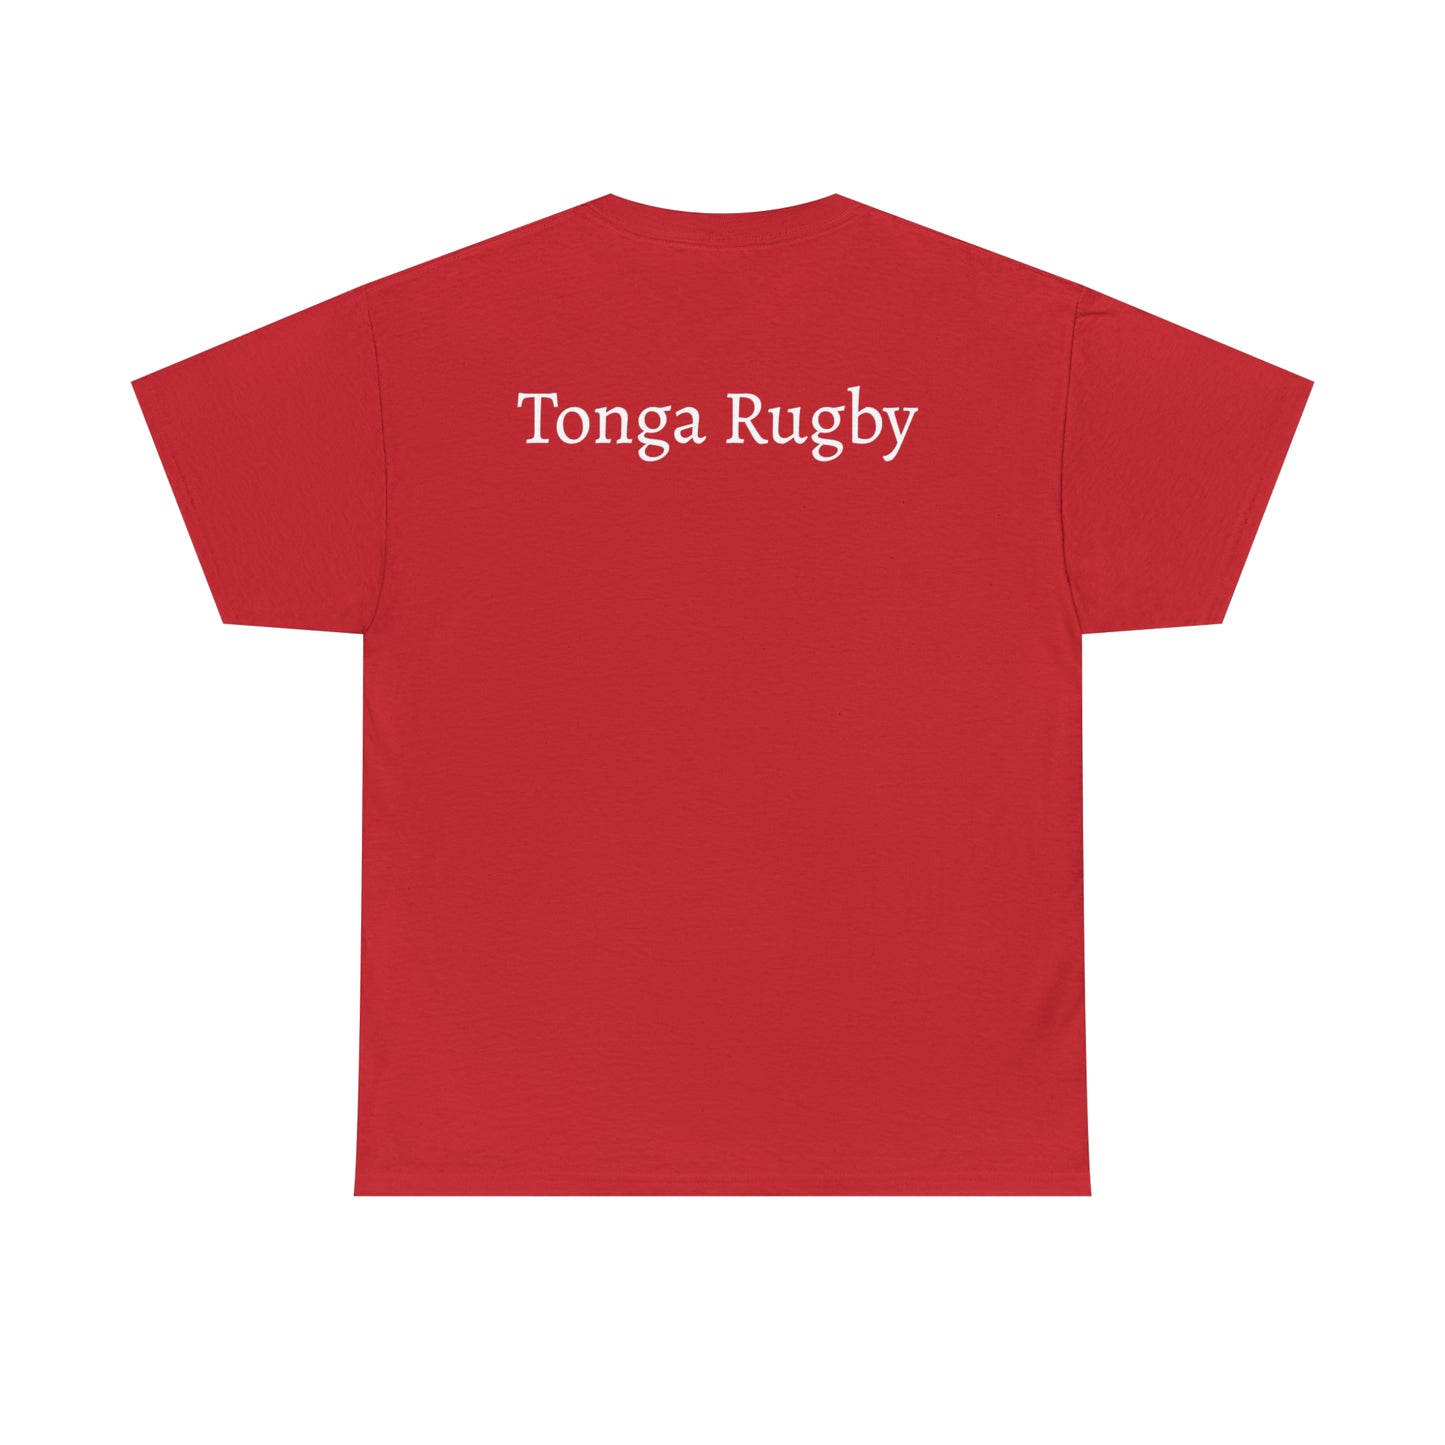 Tonga lifting the RWC - dark shirts